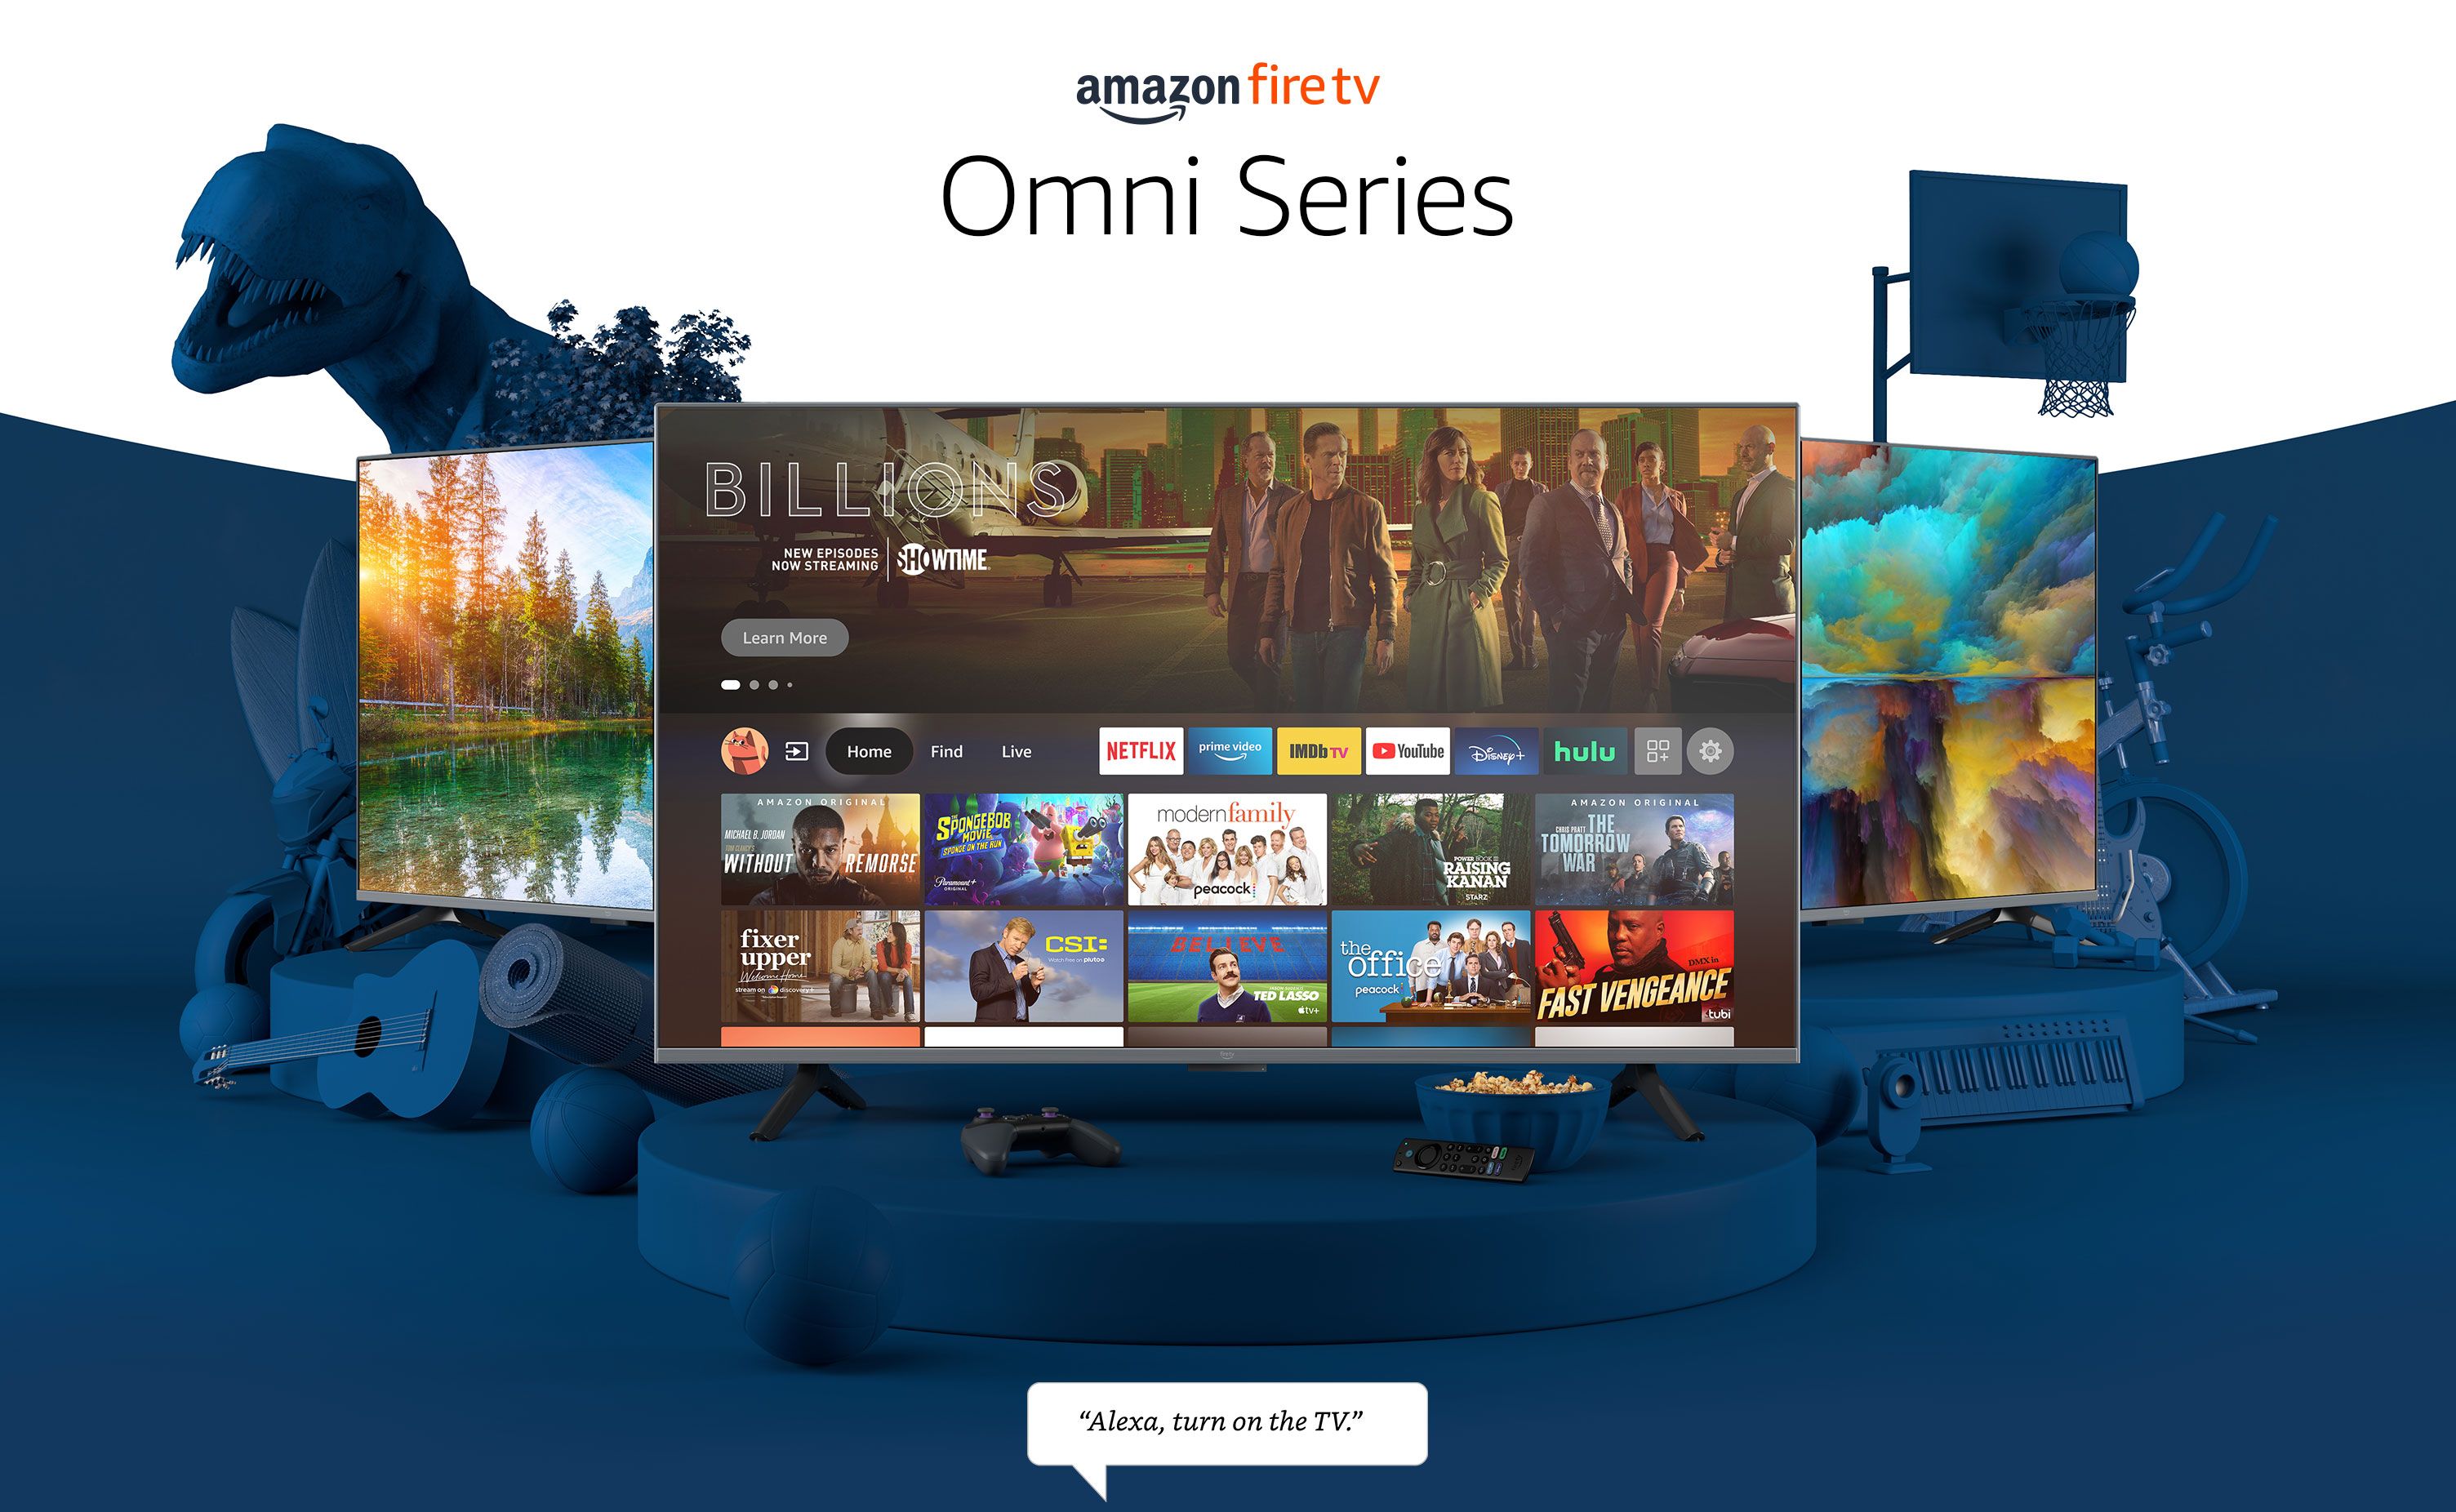 Amazon Fire TV 55" Omni Series 4K UHD smart TV, hands-free with Alexa | Amazon (US)